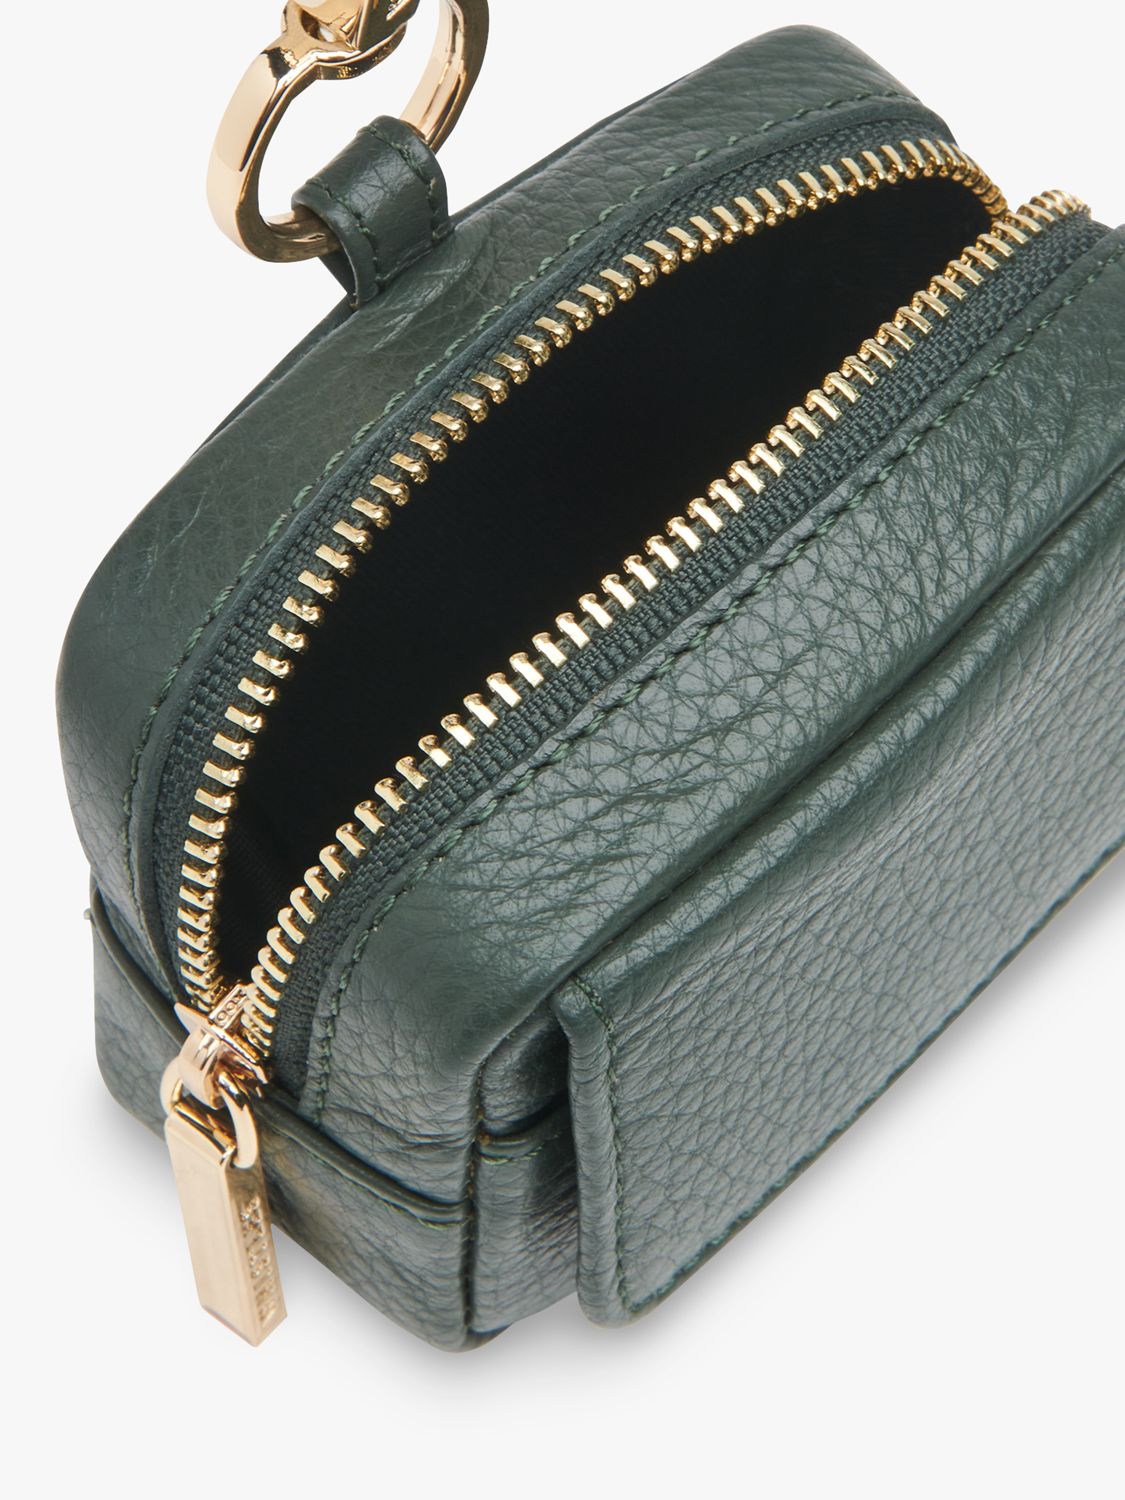 Whistles Bibi Mini Keyring Bag, Green, One Size